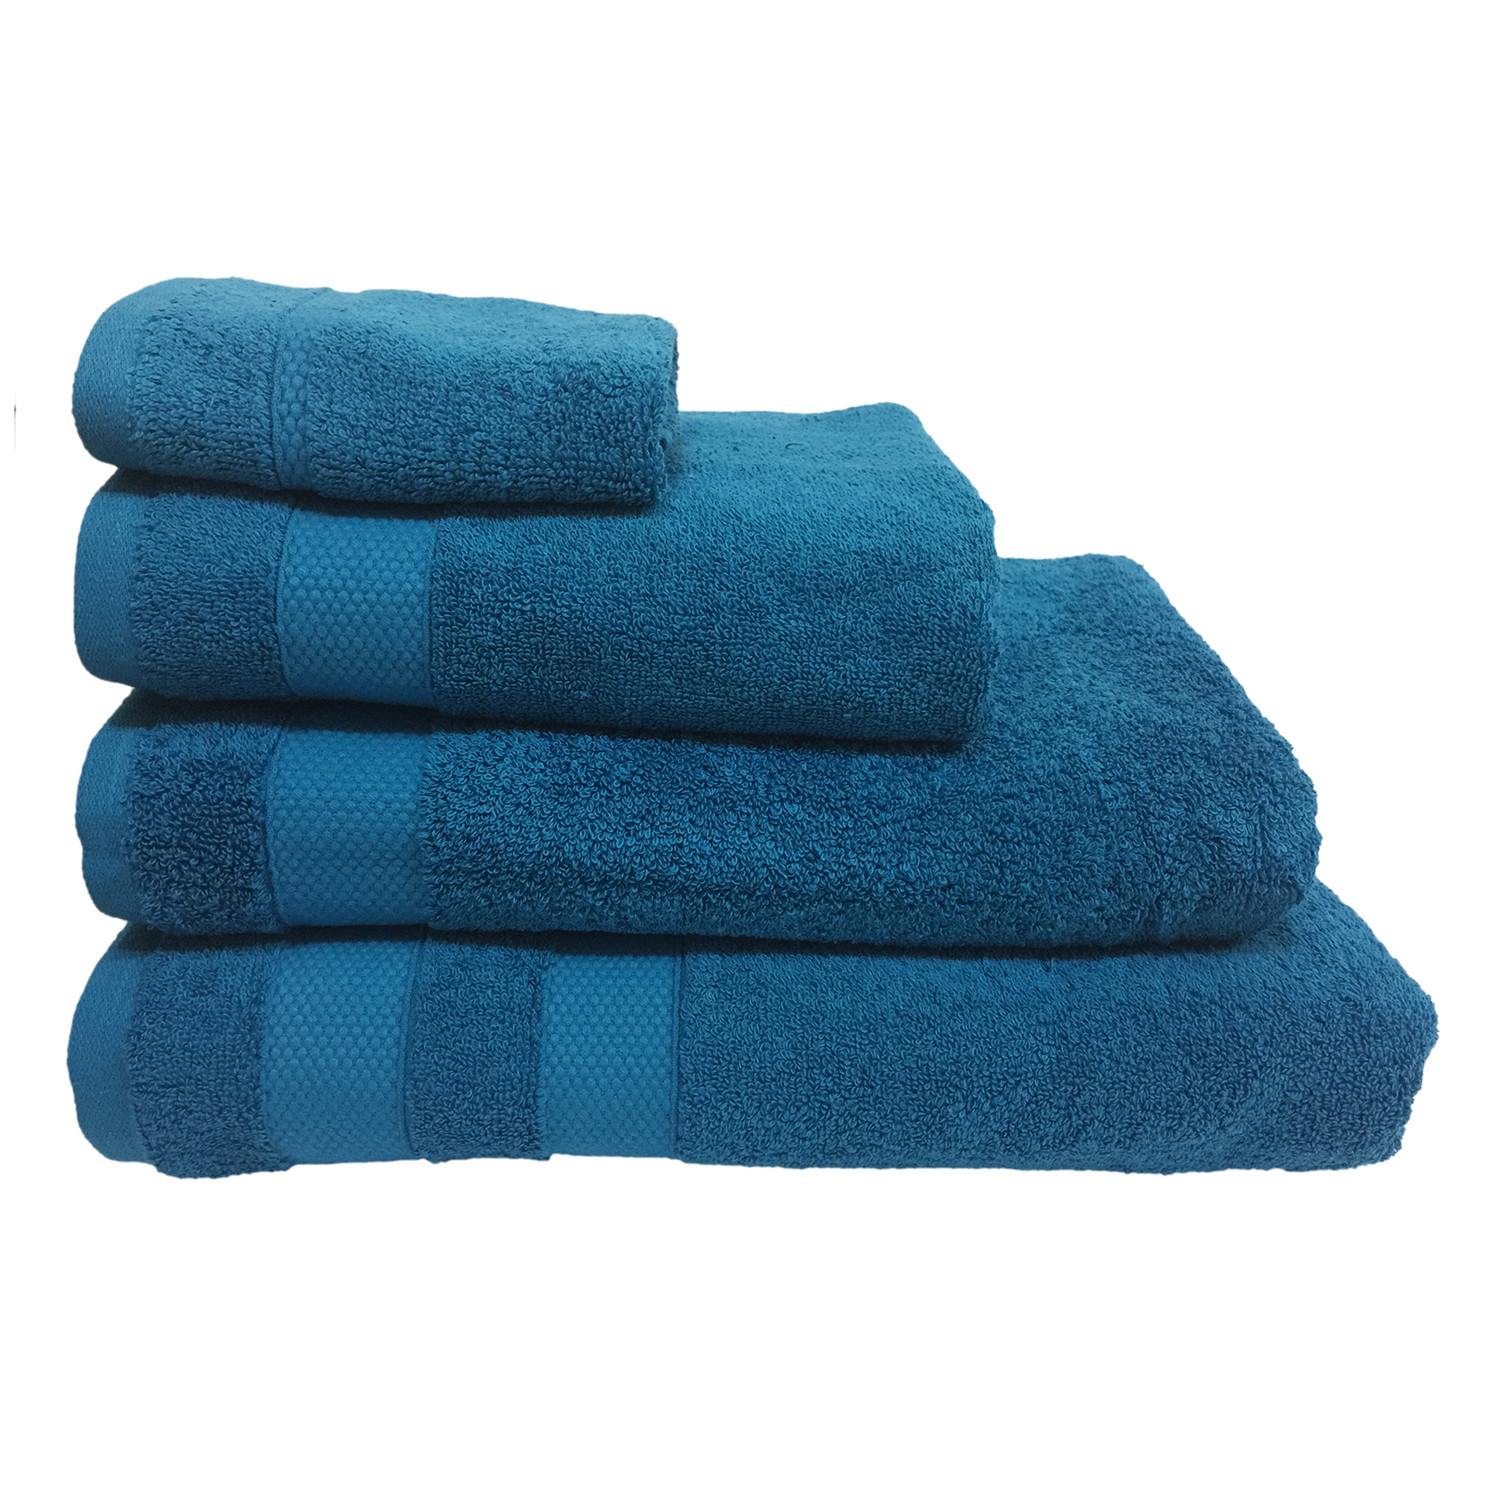 Divante Soft Egyptian Cotton Blue Bath Sheet Image